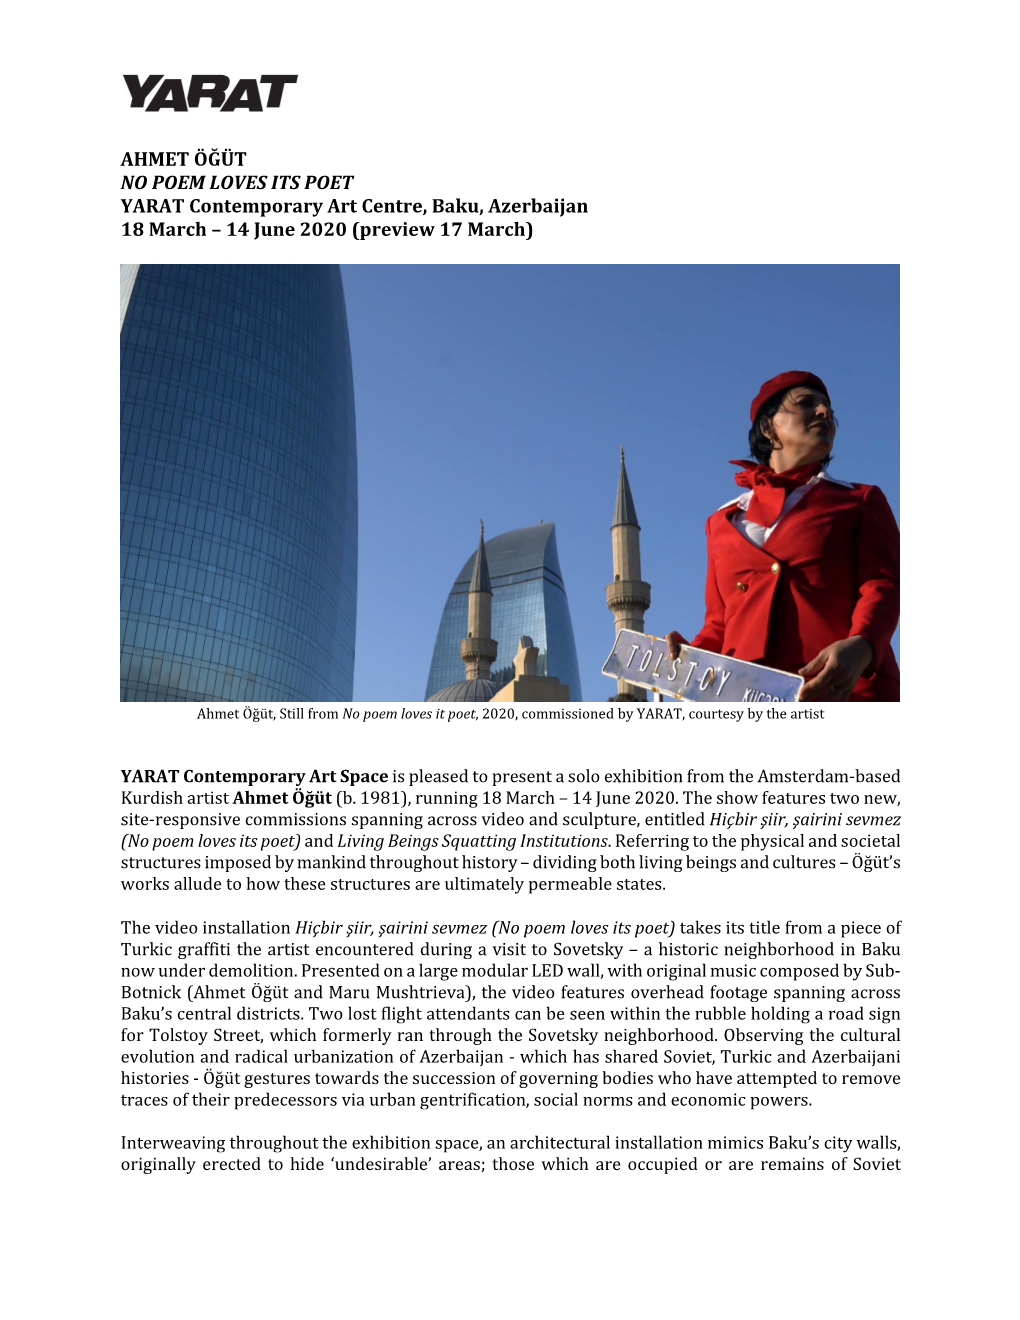 AHMET ÖĞÜT NO POEM LOVES ITS POET YARAT Contemporary Art Centre, Baku, Azerbaijan 18 March – 14 June 2020 (Preview 17 March)